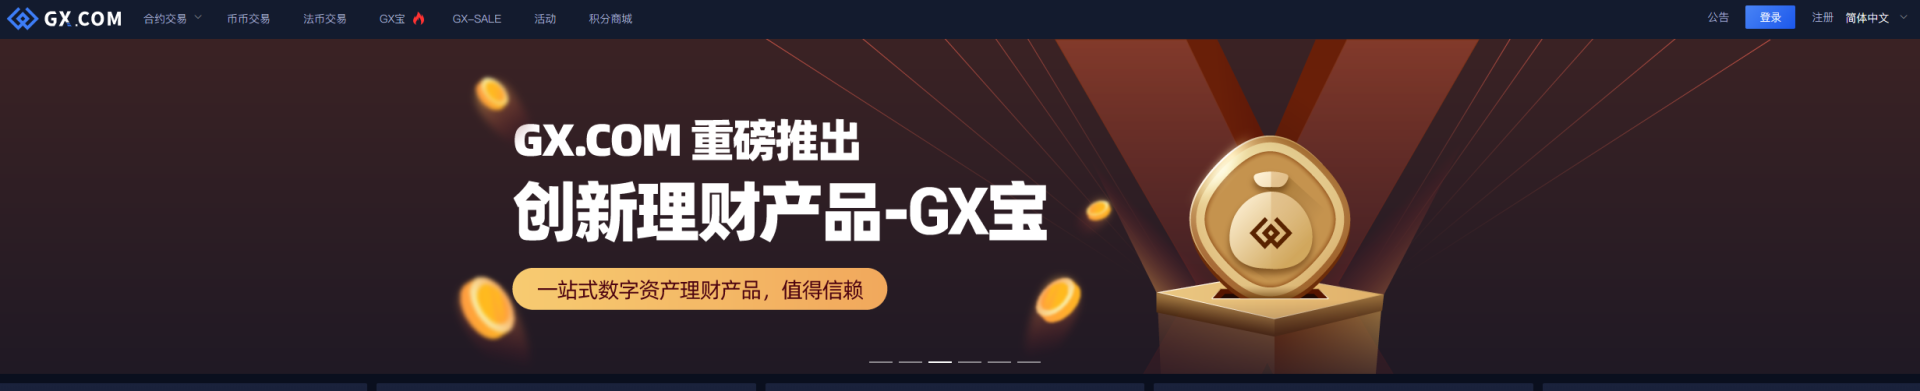 GX.COM正式登陆全球最具权威的行情网站CMC